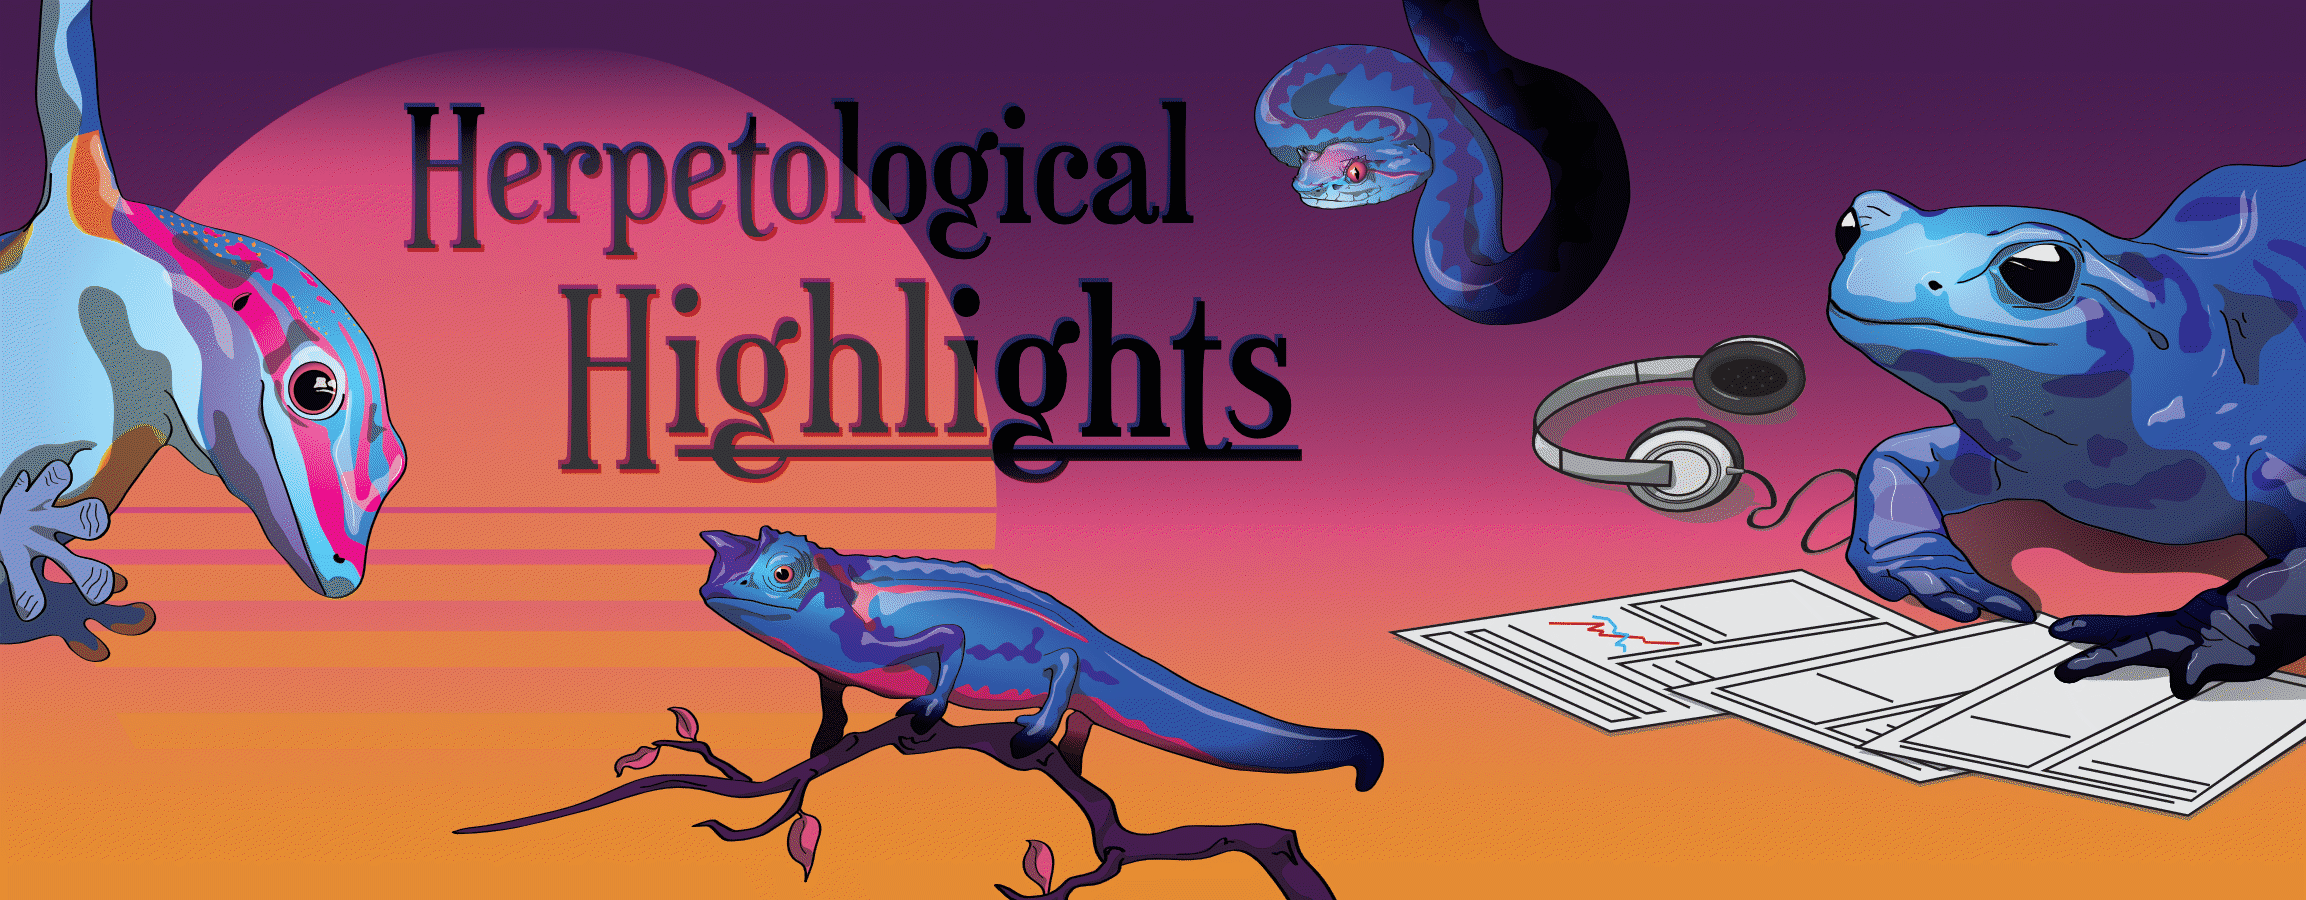 Herpetological Highlights